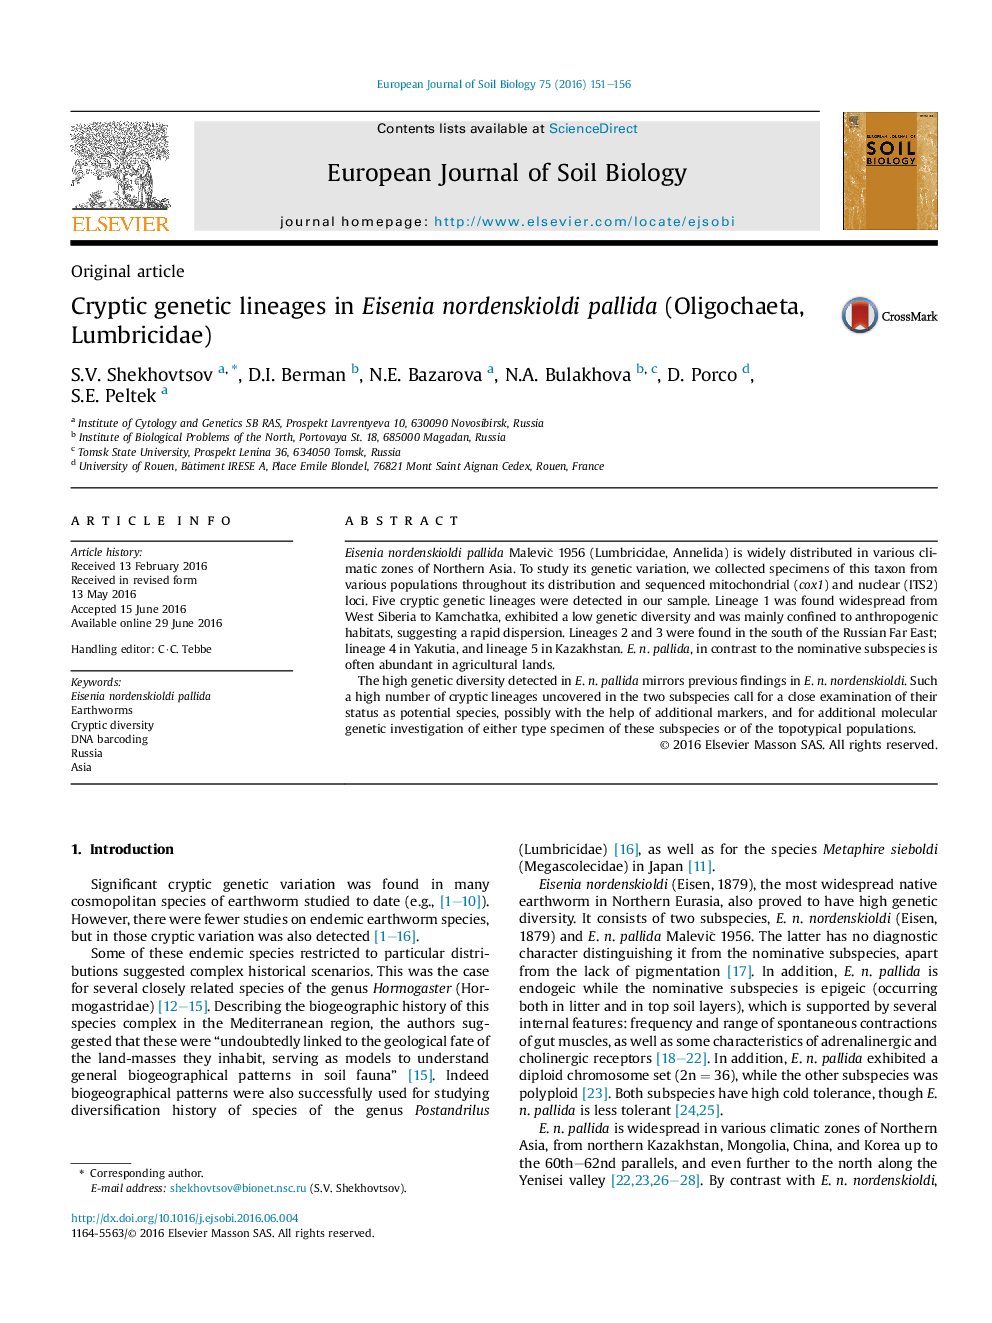 Cryptic genetic lineages in Eisenia nordenskioldi pallida (Oligochaeta, Lumbricidae)